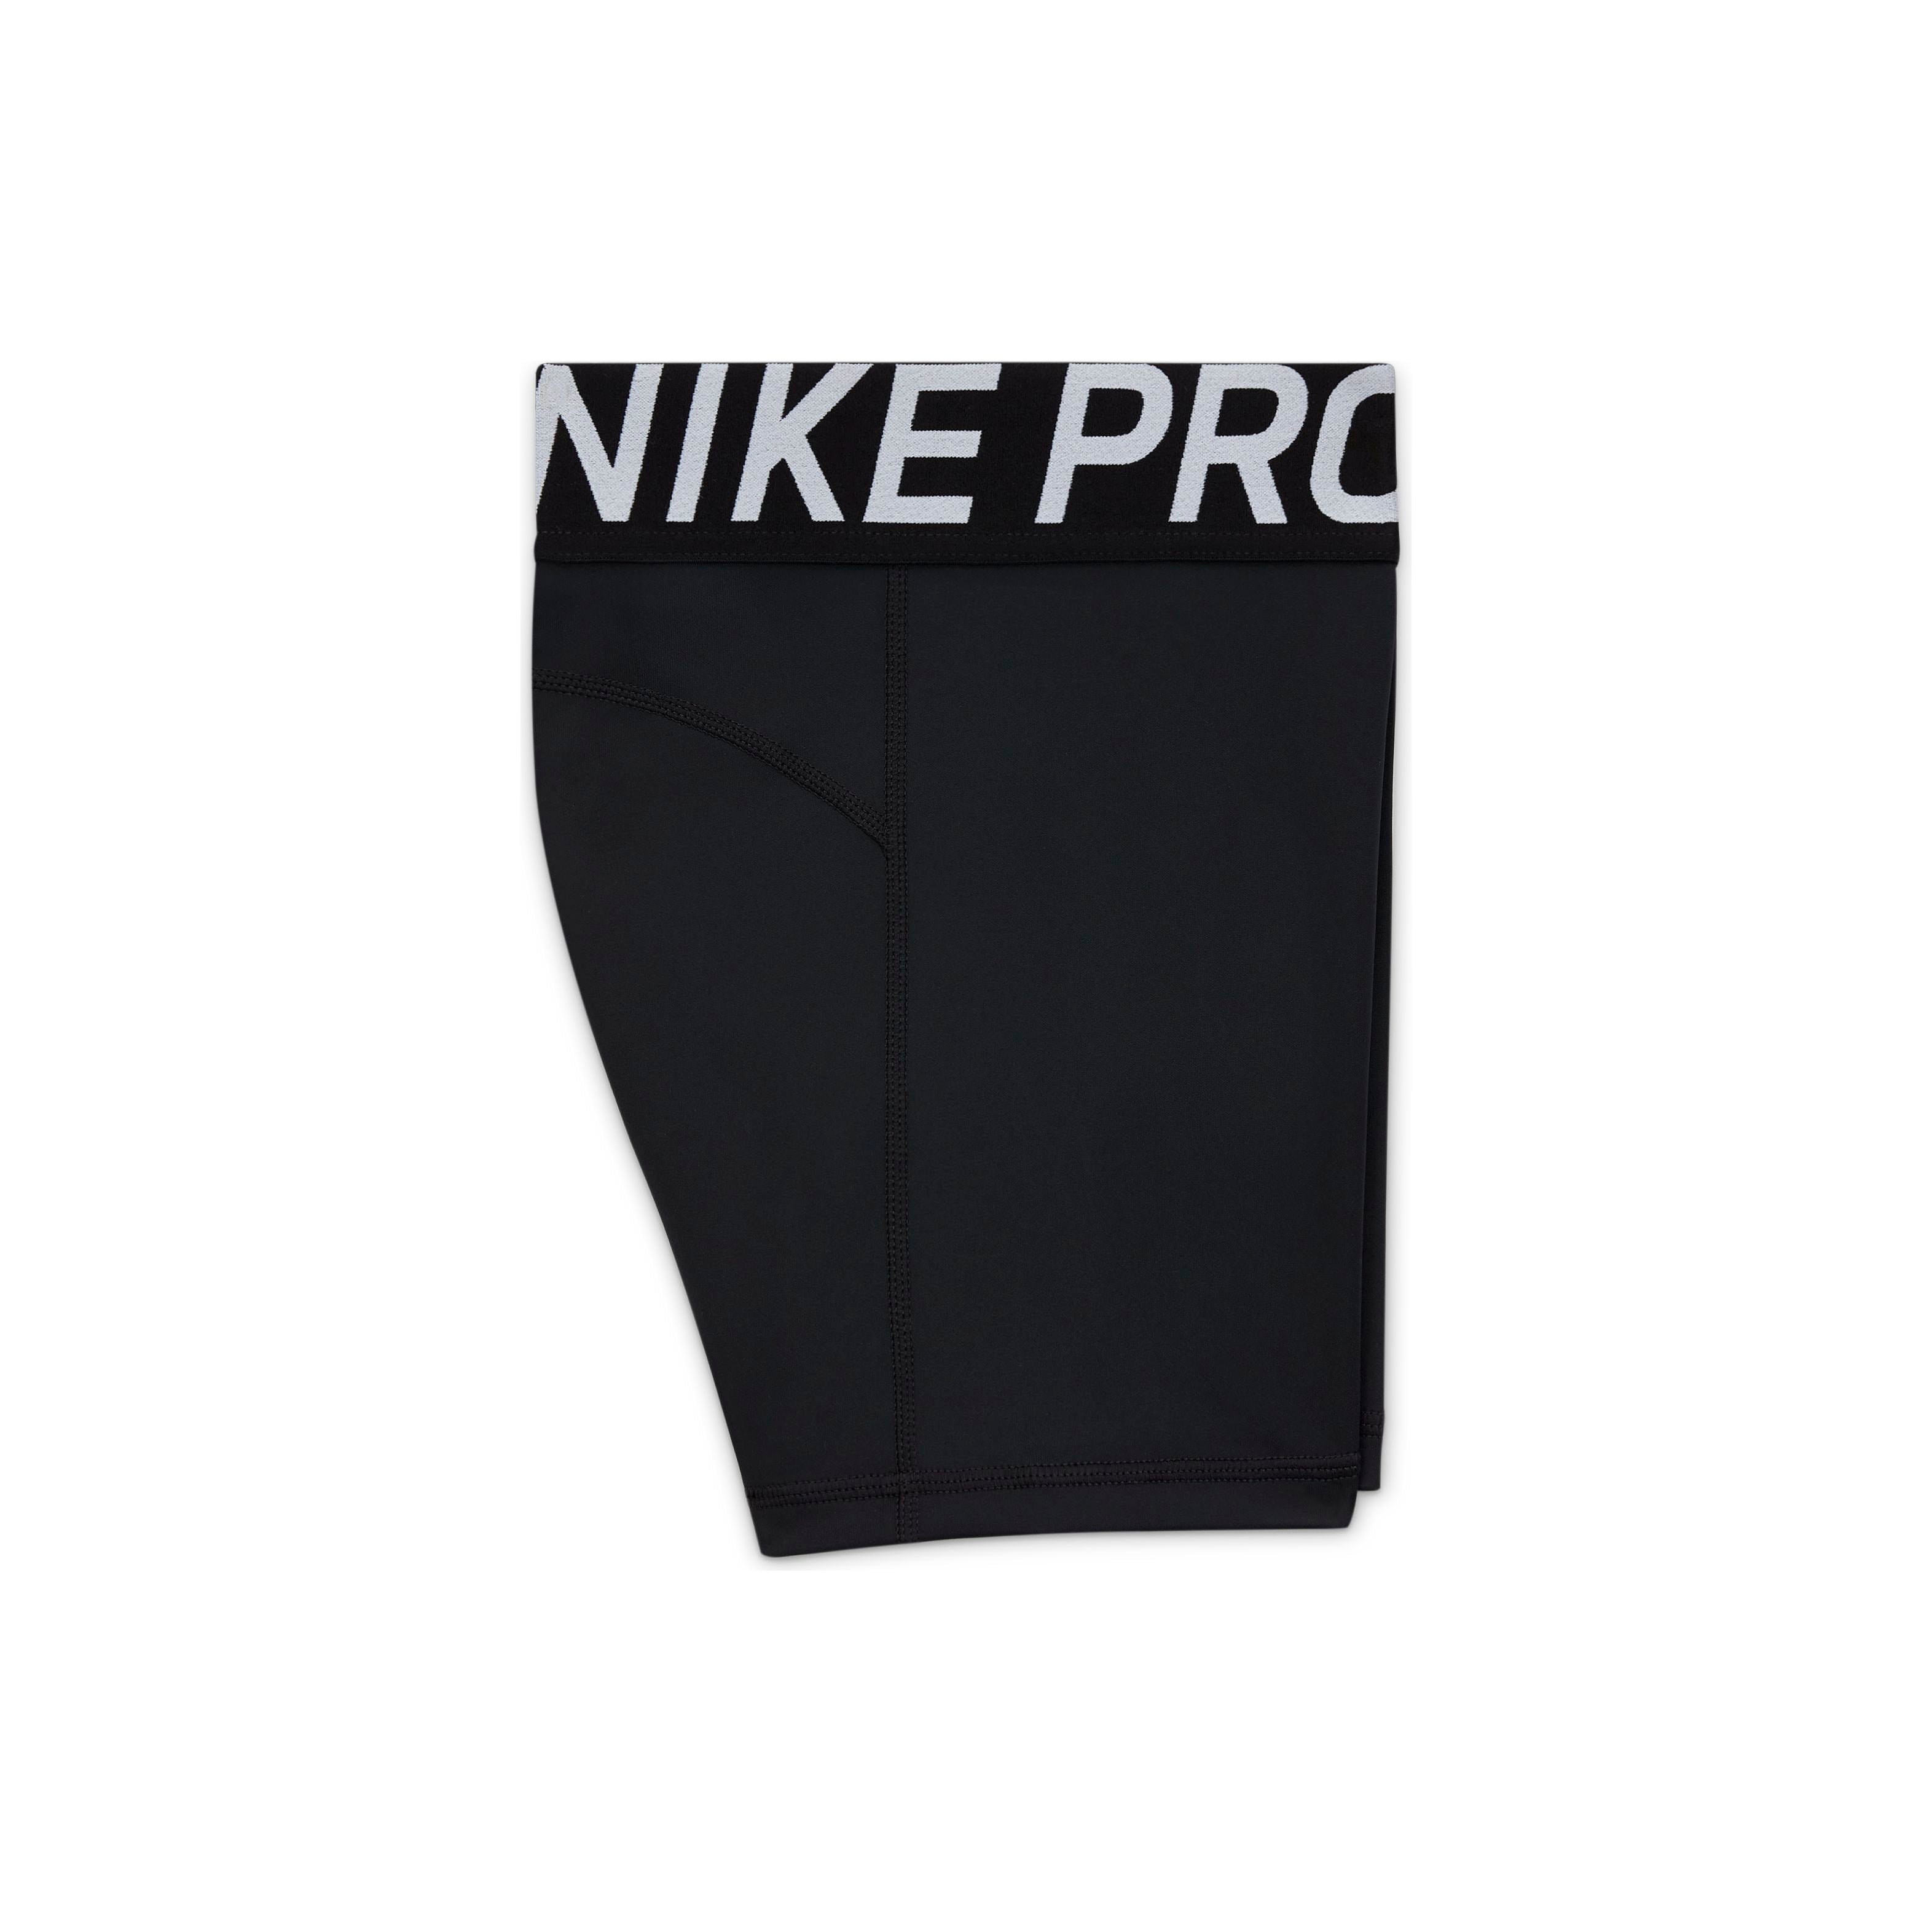 Nike Youth Pro Compression Short - Black / White